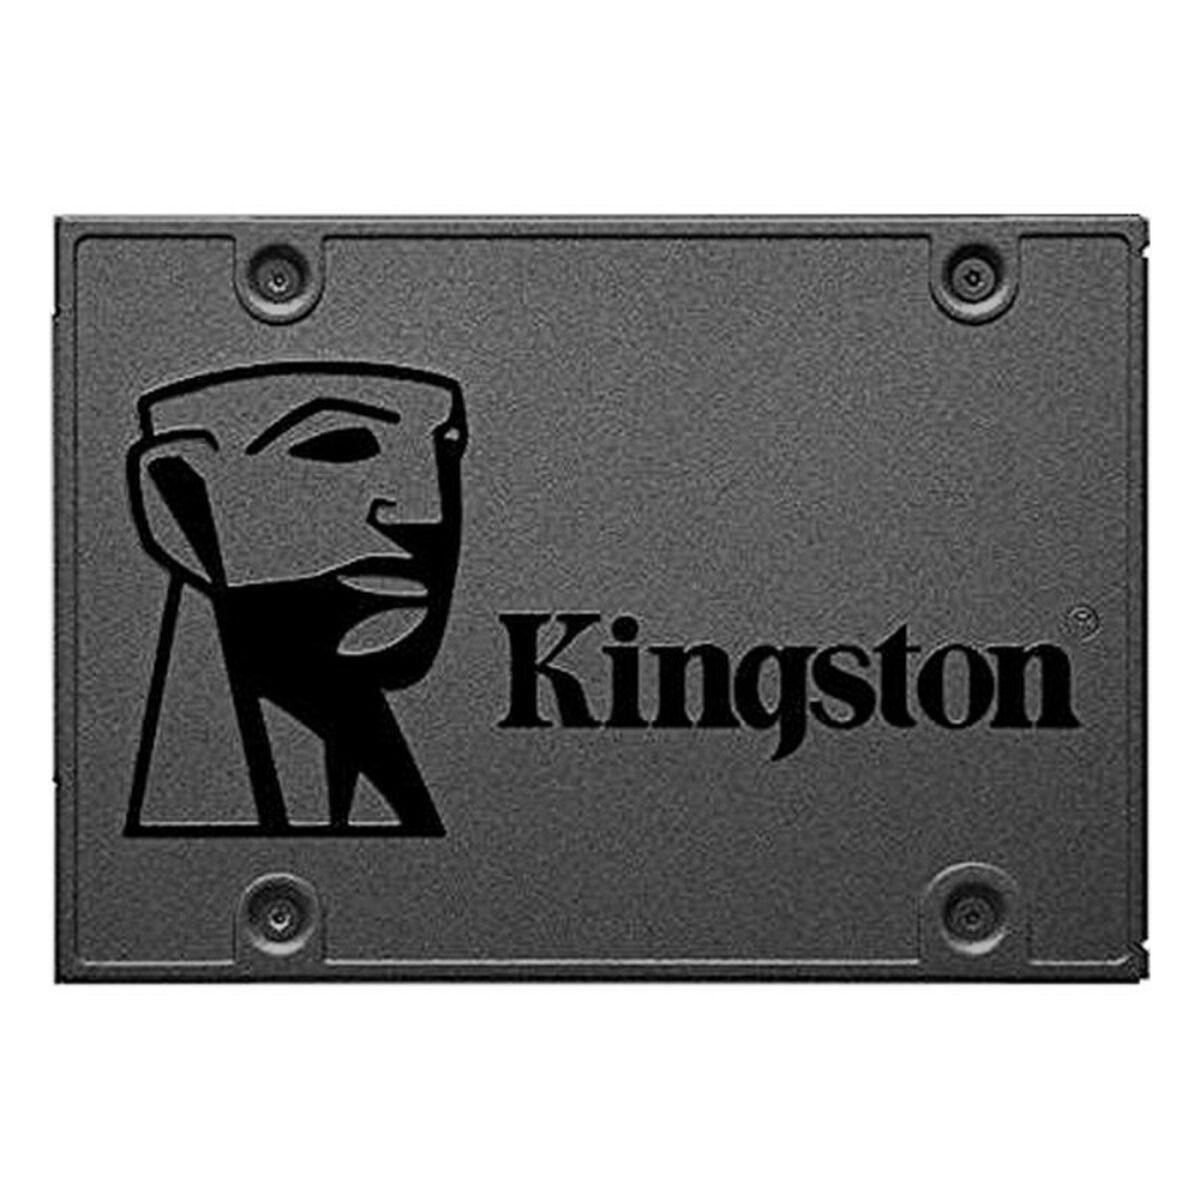 Harddisk Kingston A400 SSD 2,5" 960 GB